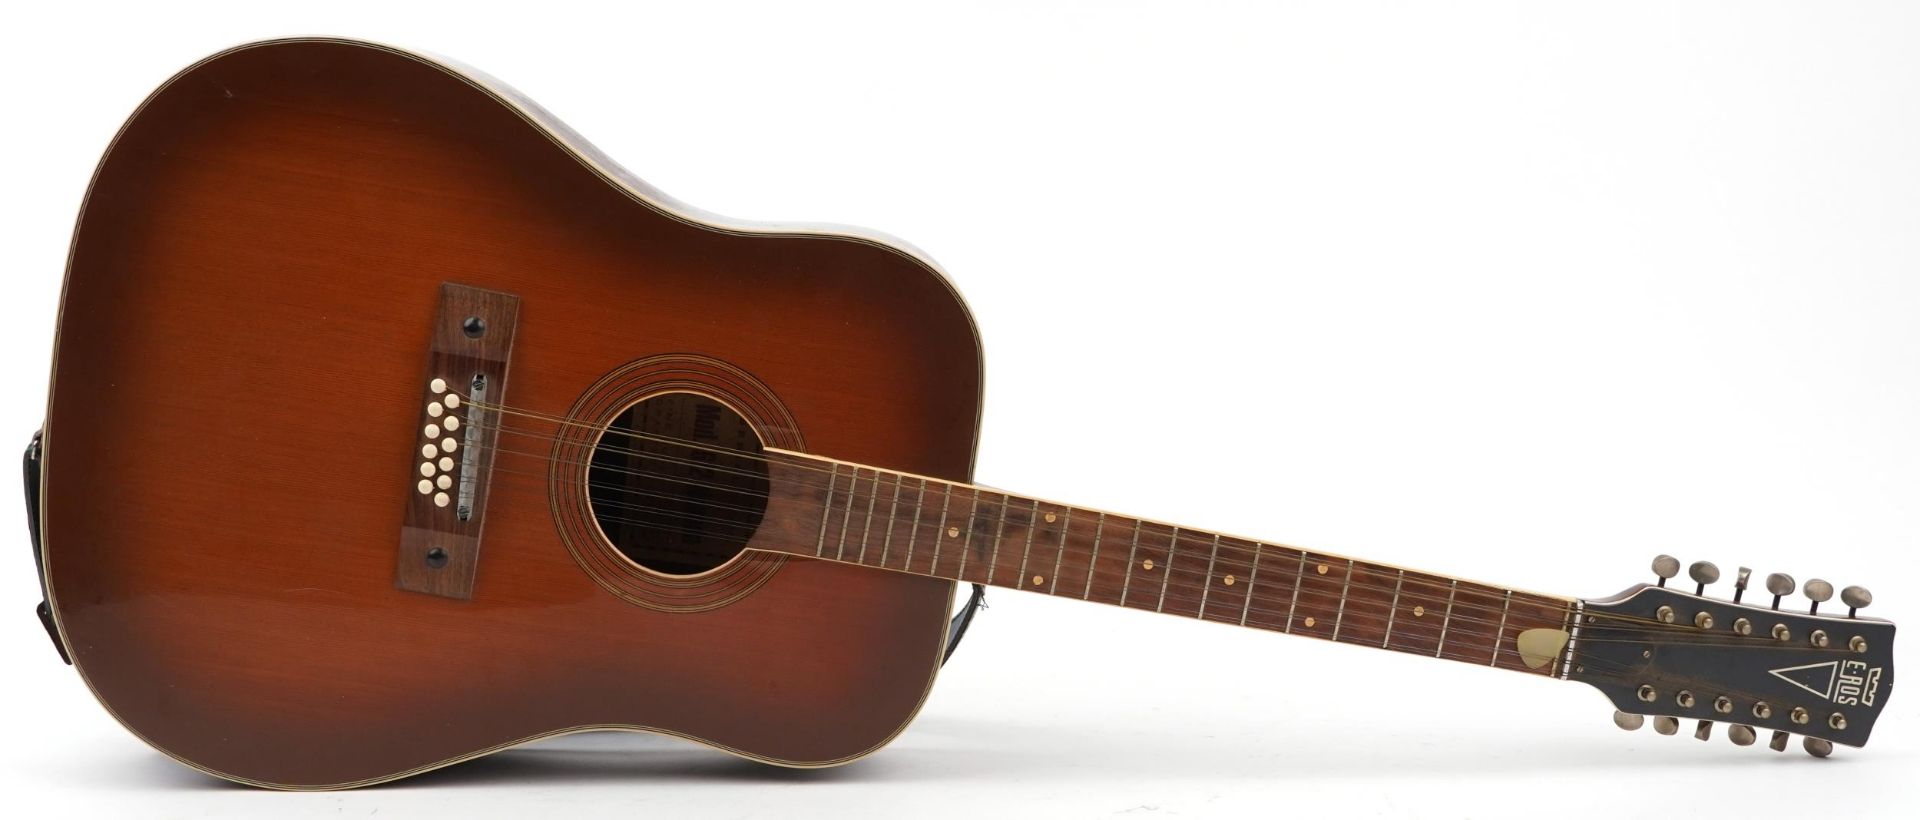 E-Ros, twelve string guitar model 612 Nevada, serial number 02253, 109cm in length : For further